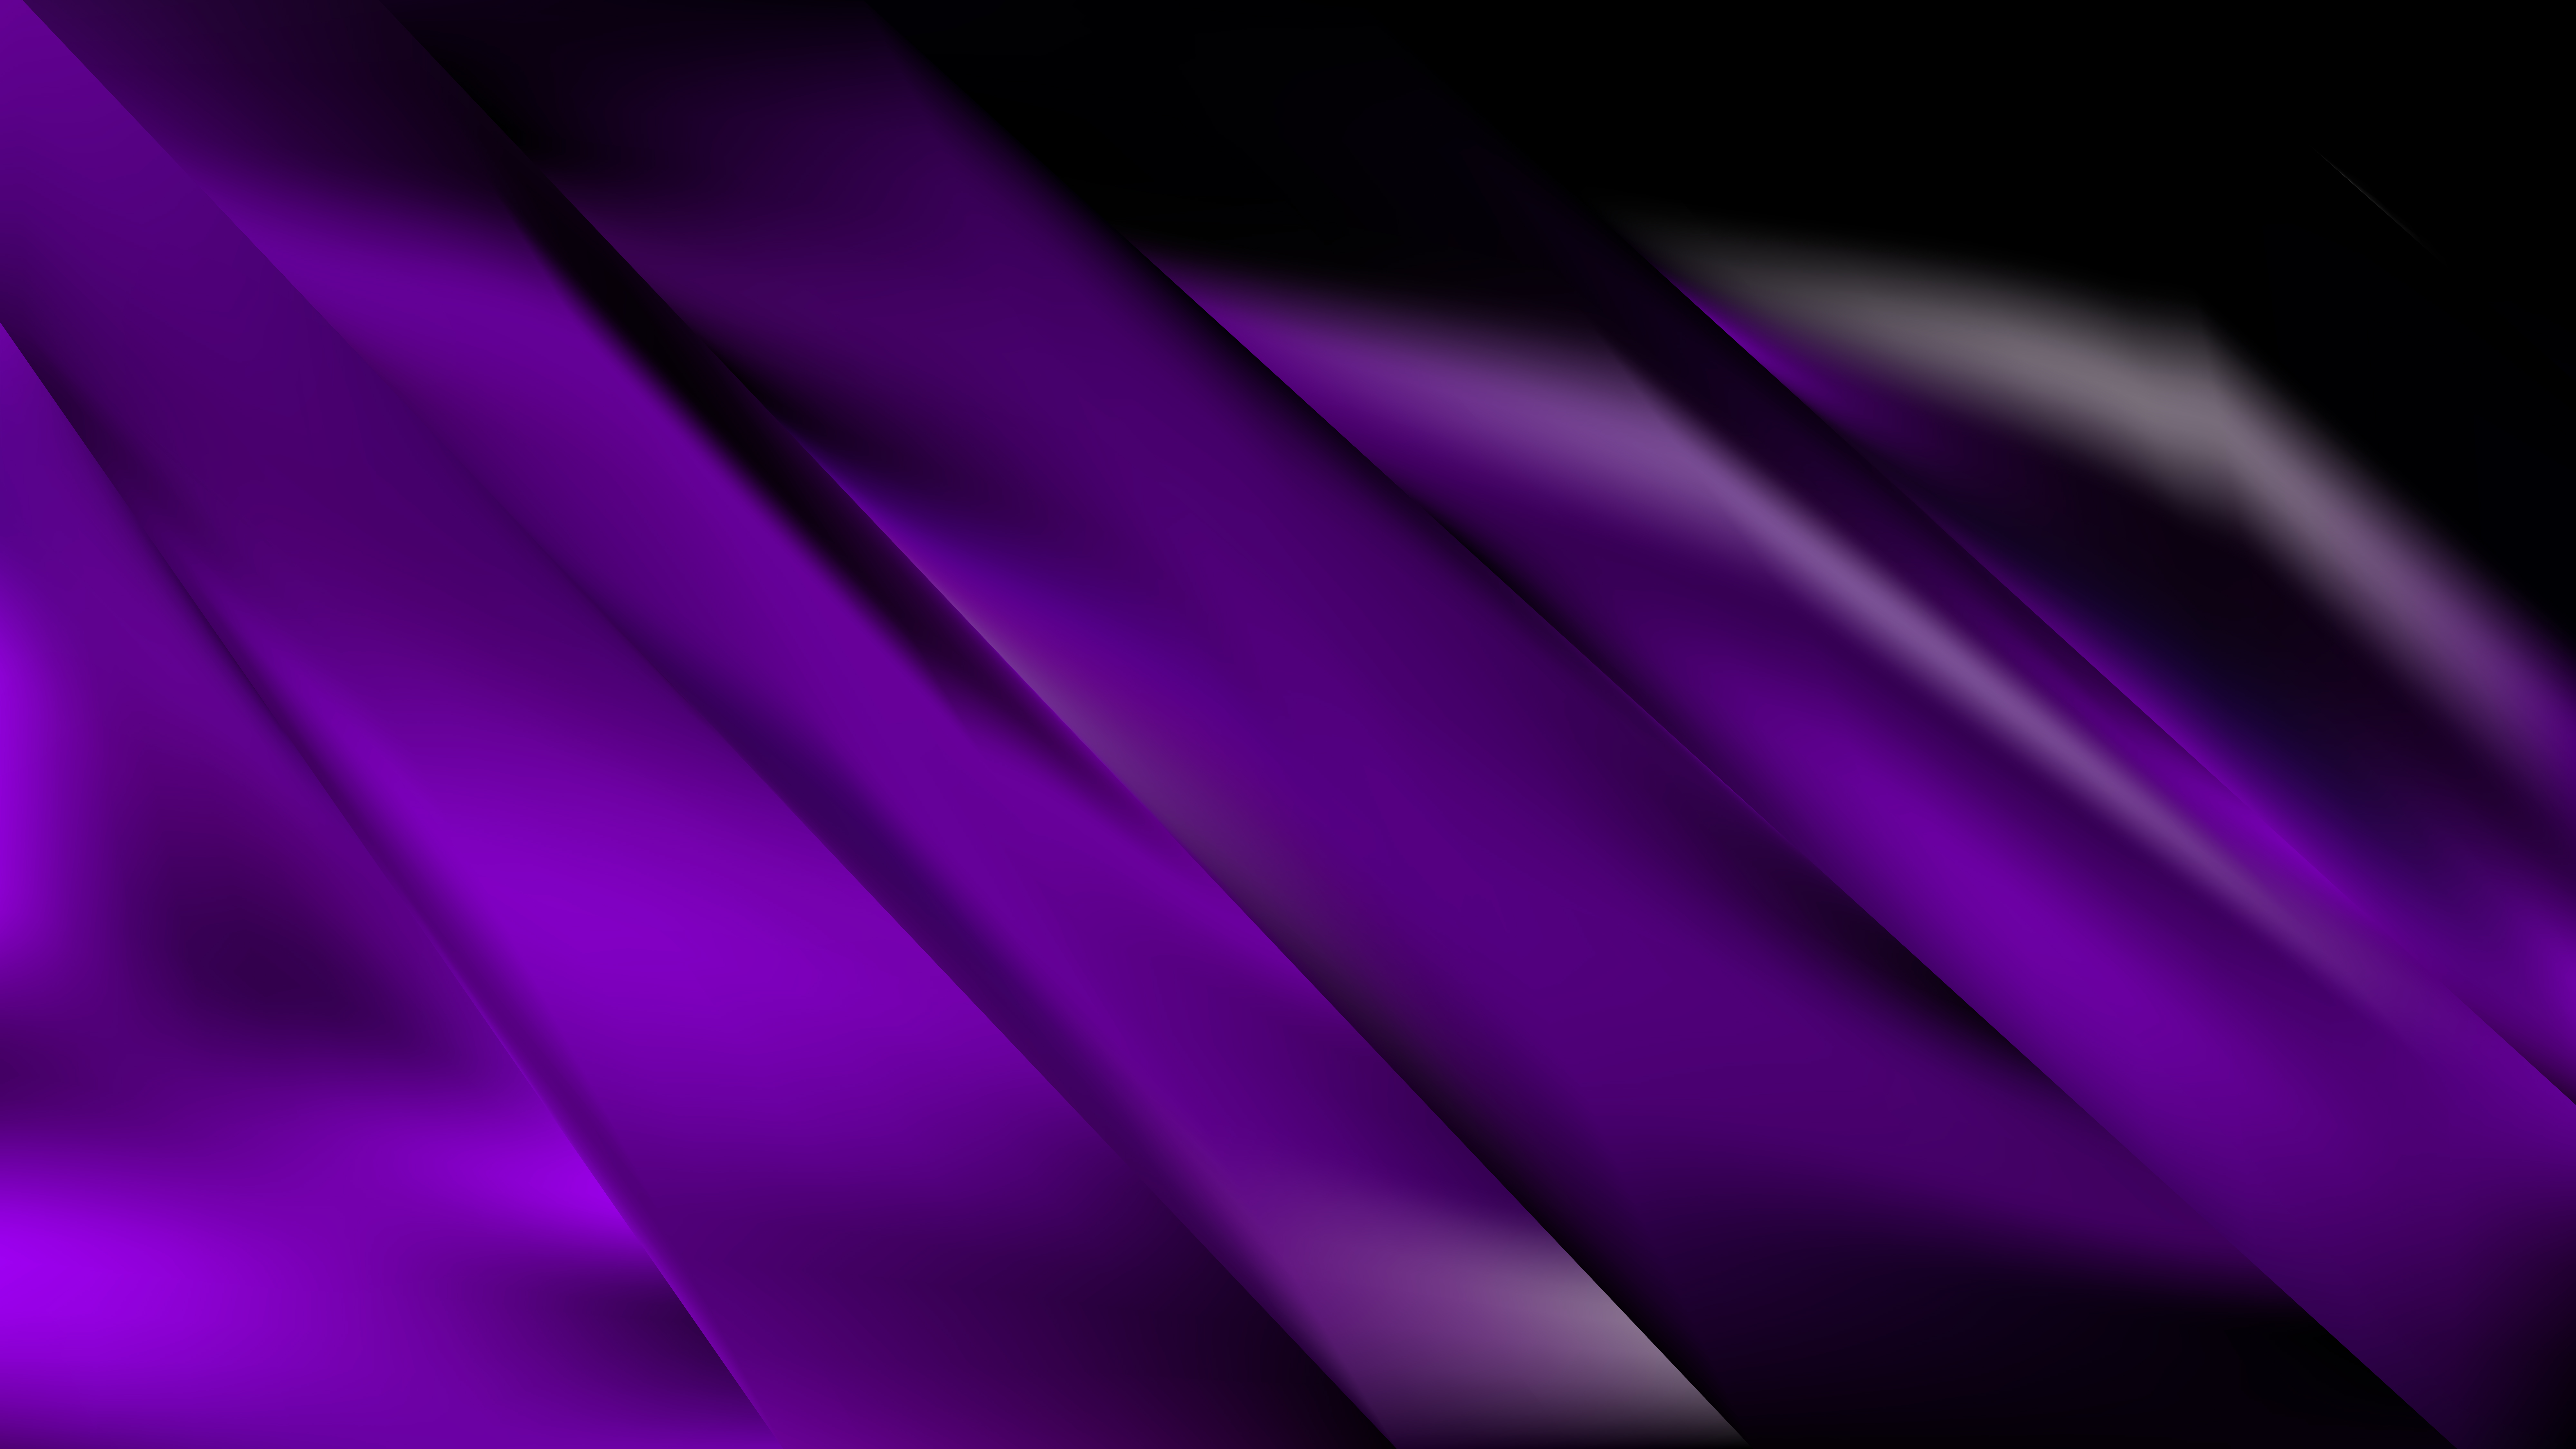 Free Cool Purple Background